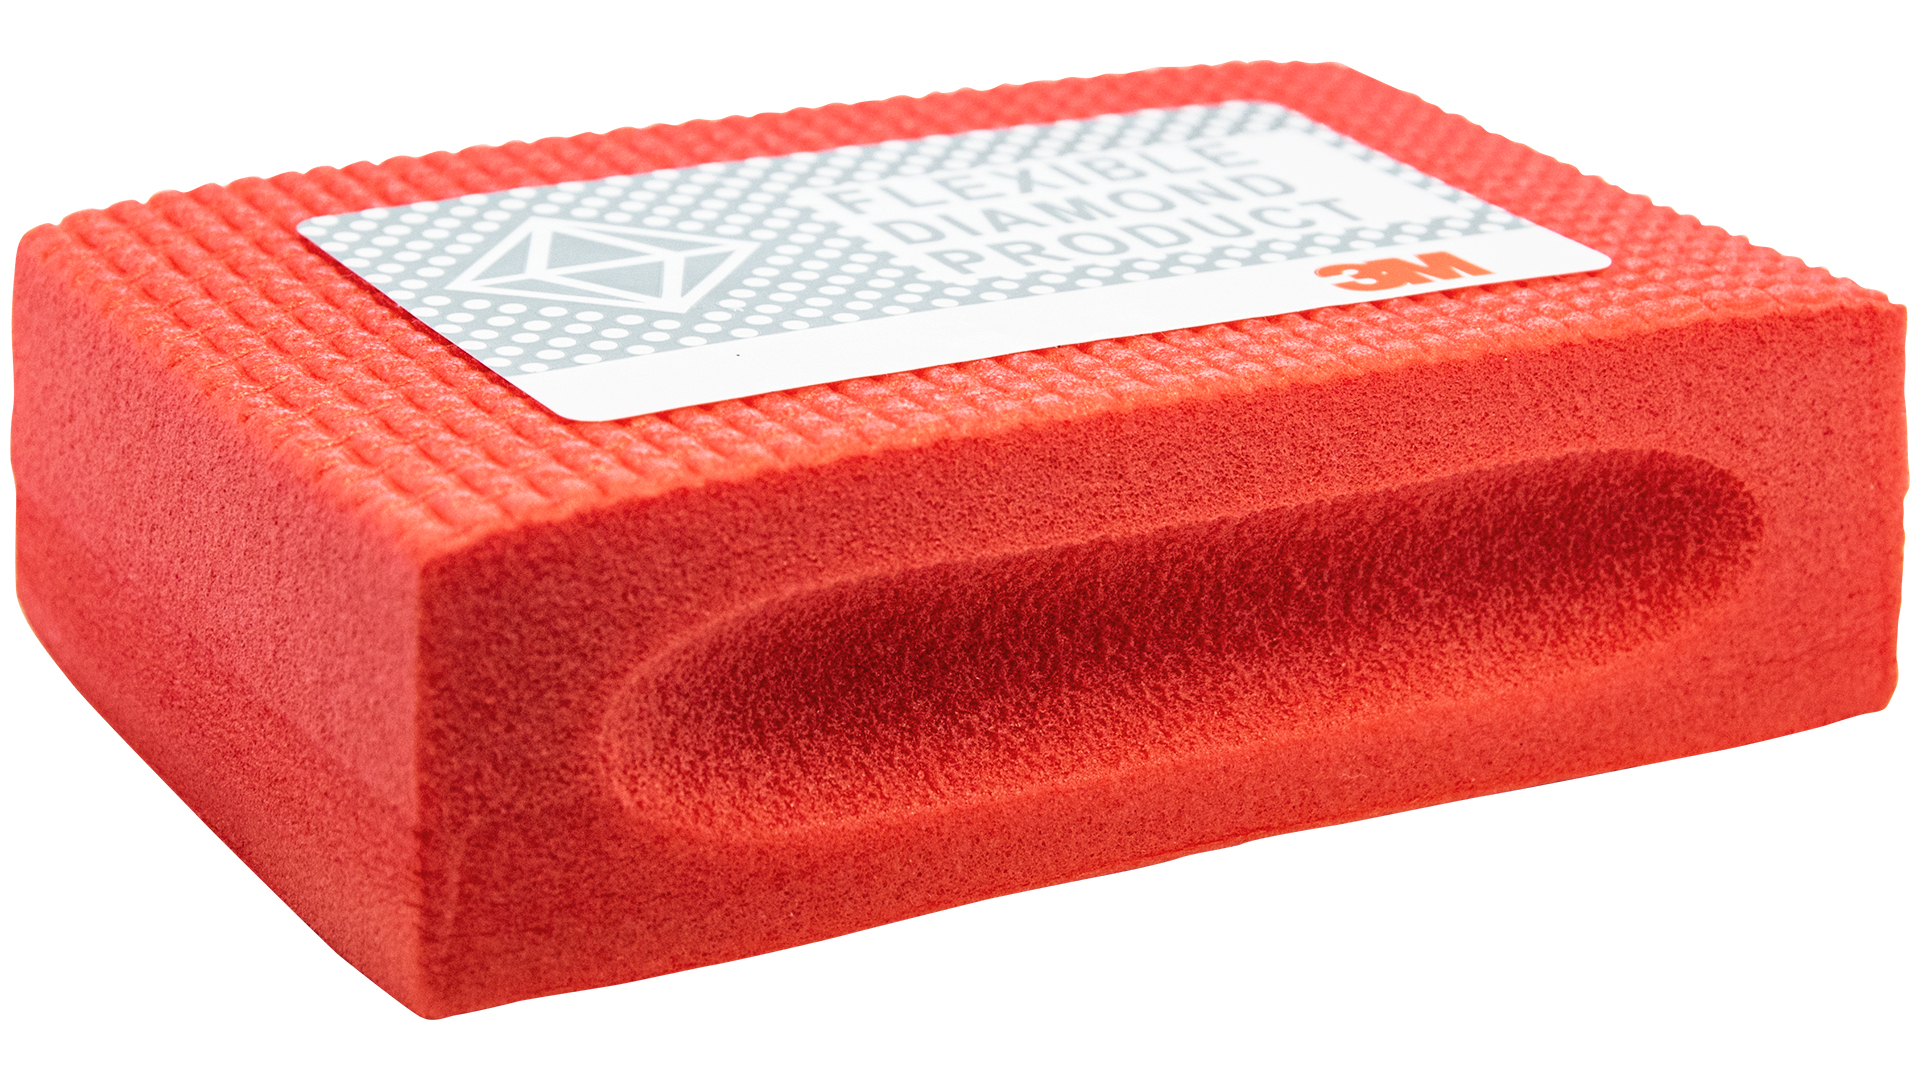 Diamond abrasive pad 3M, grit medium N74 (220), color red